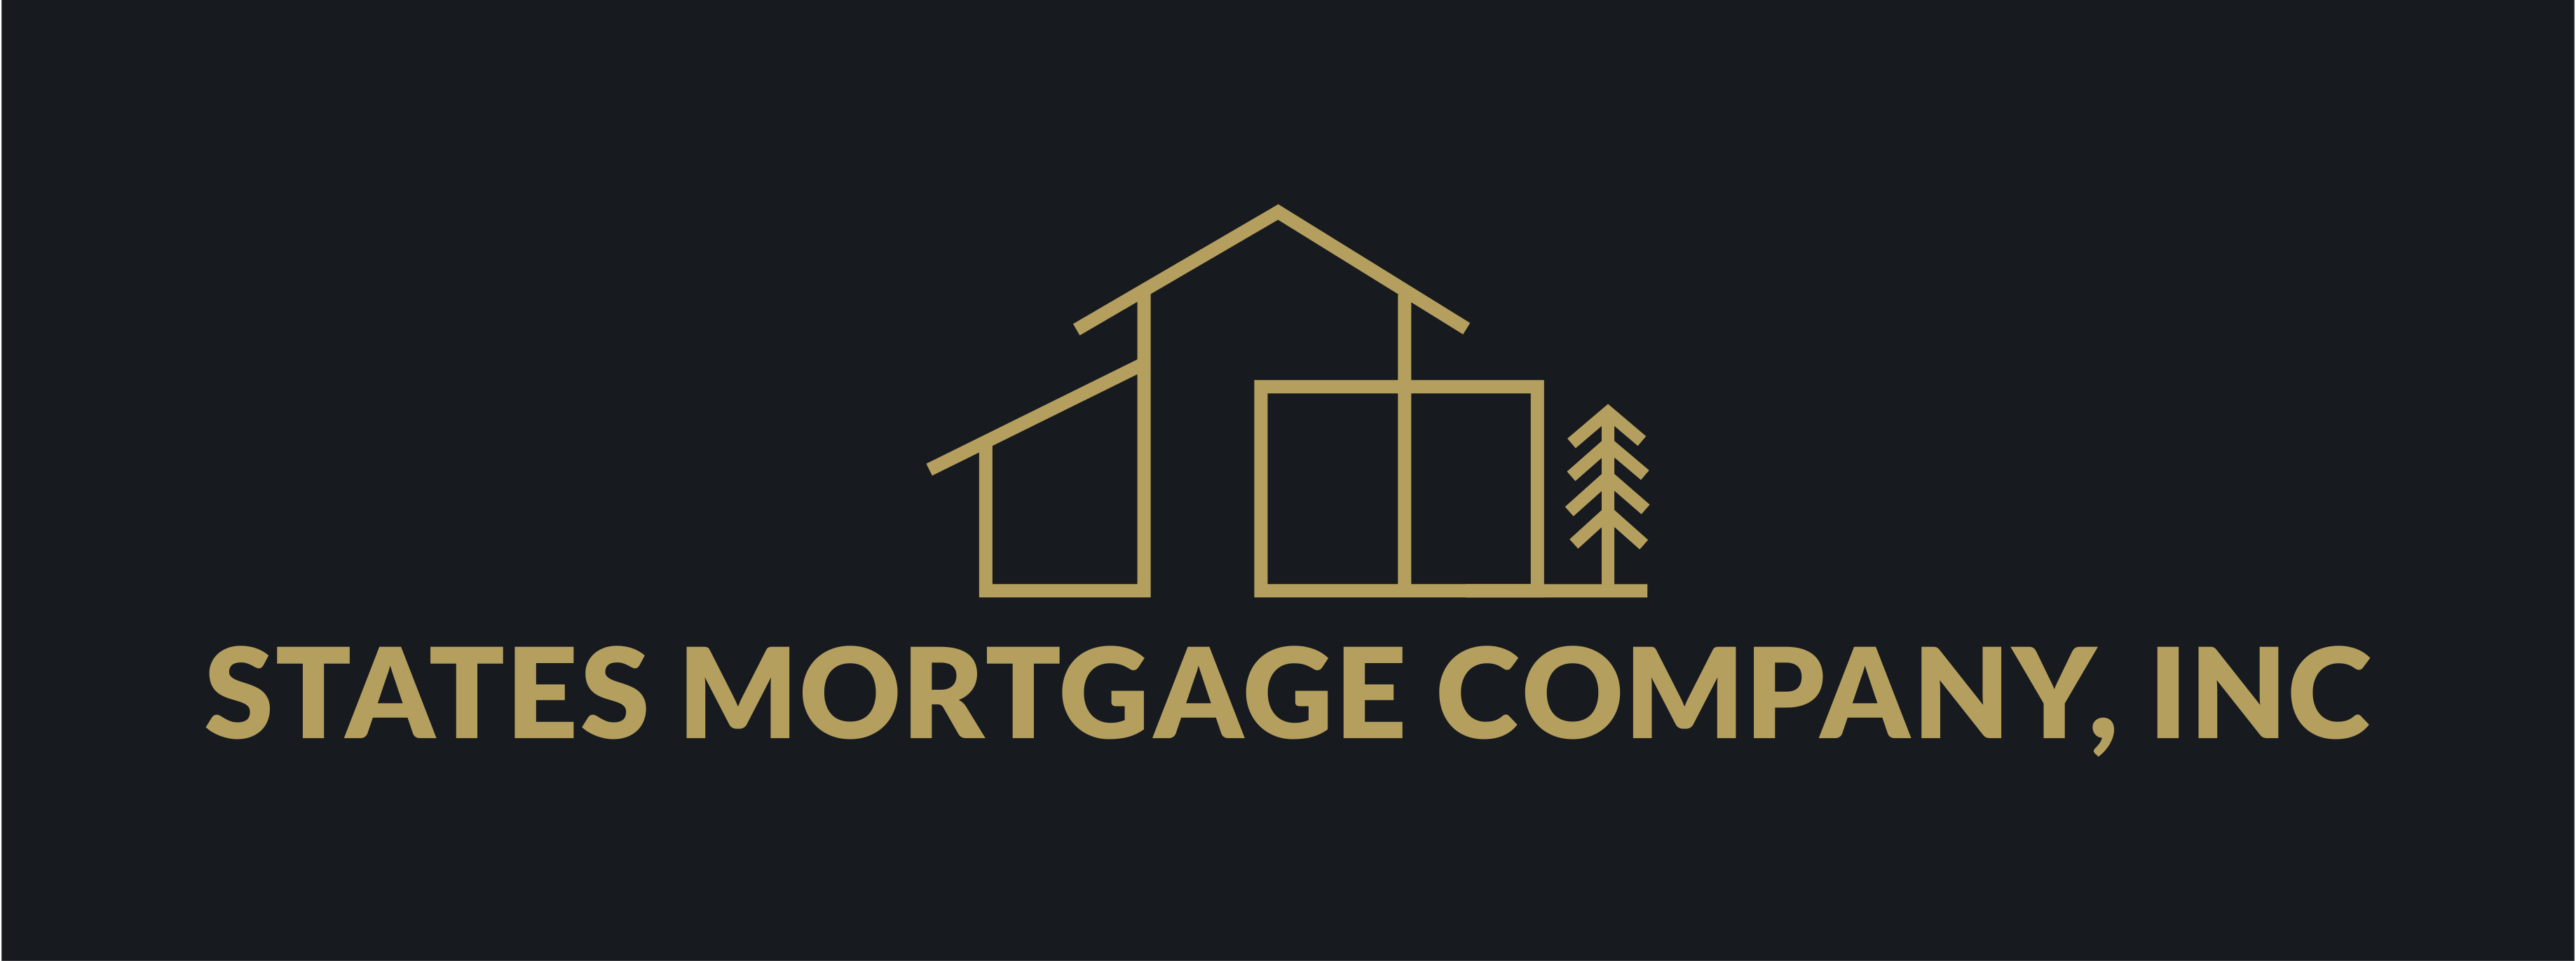 States Mortgage Company, Inc